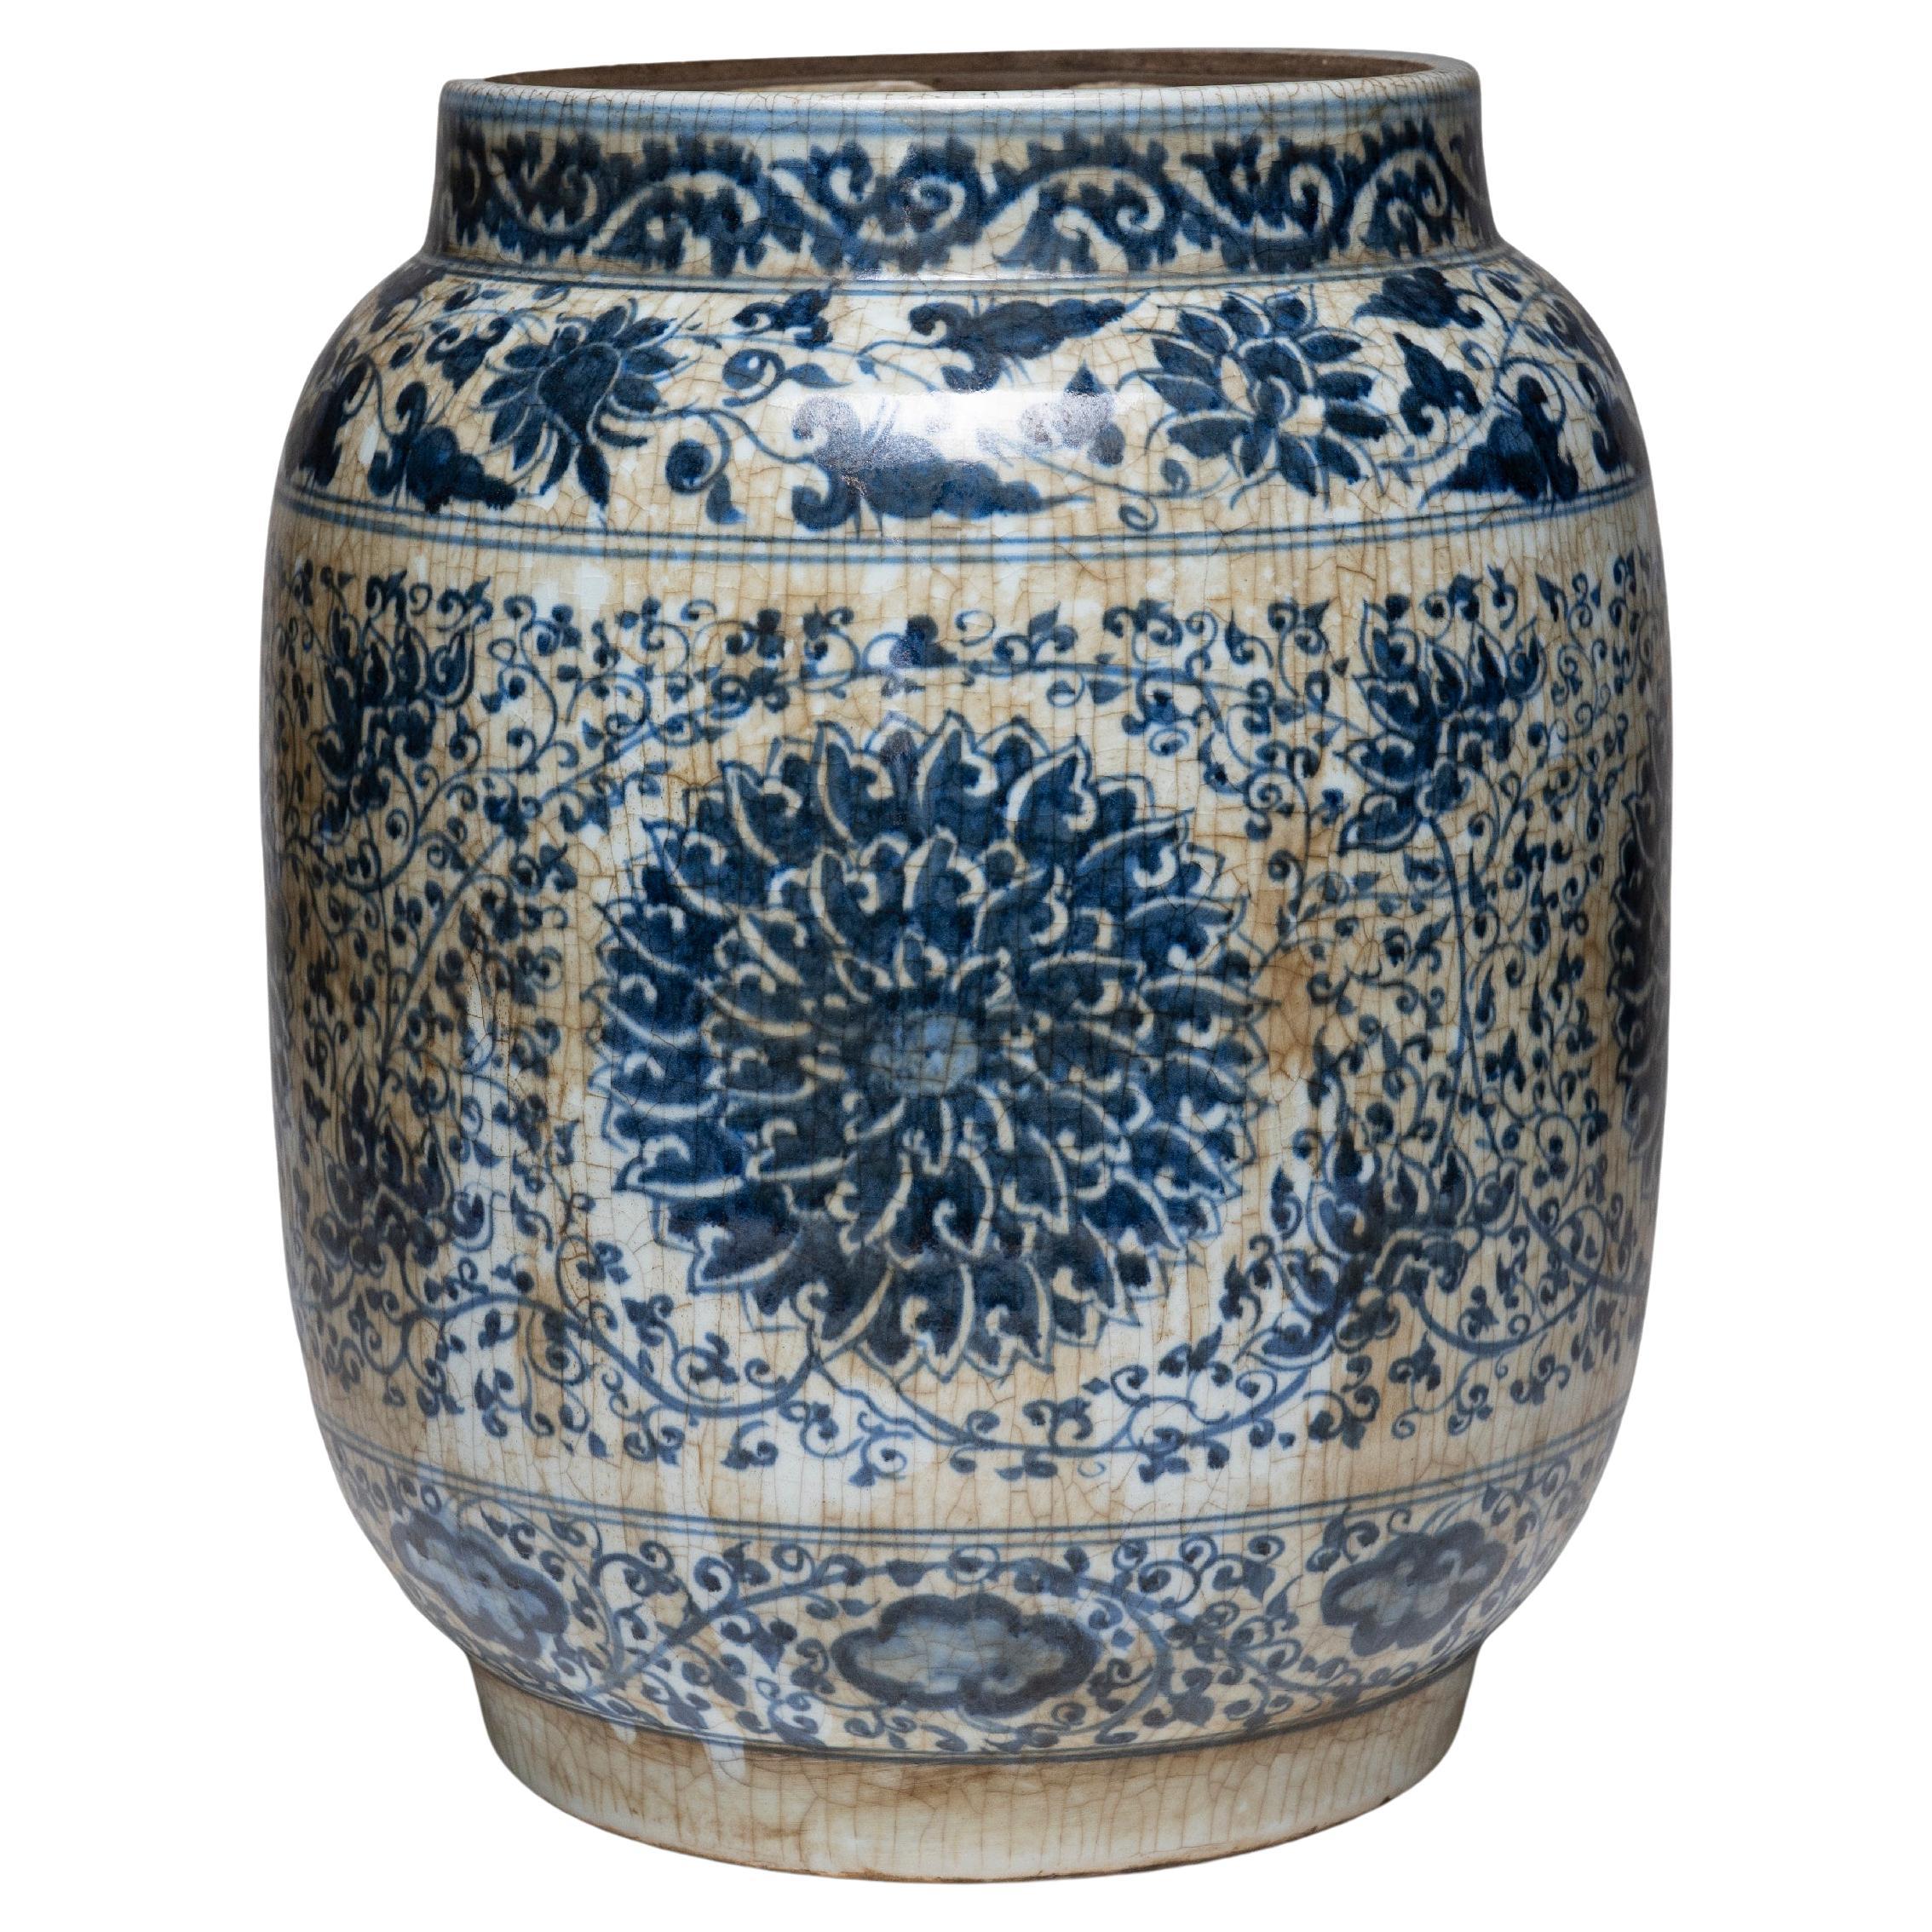 Chinese Blue and White Longevity Baluster Jar